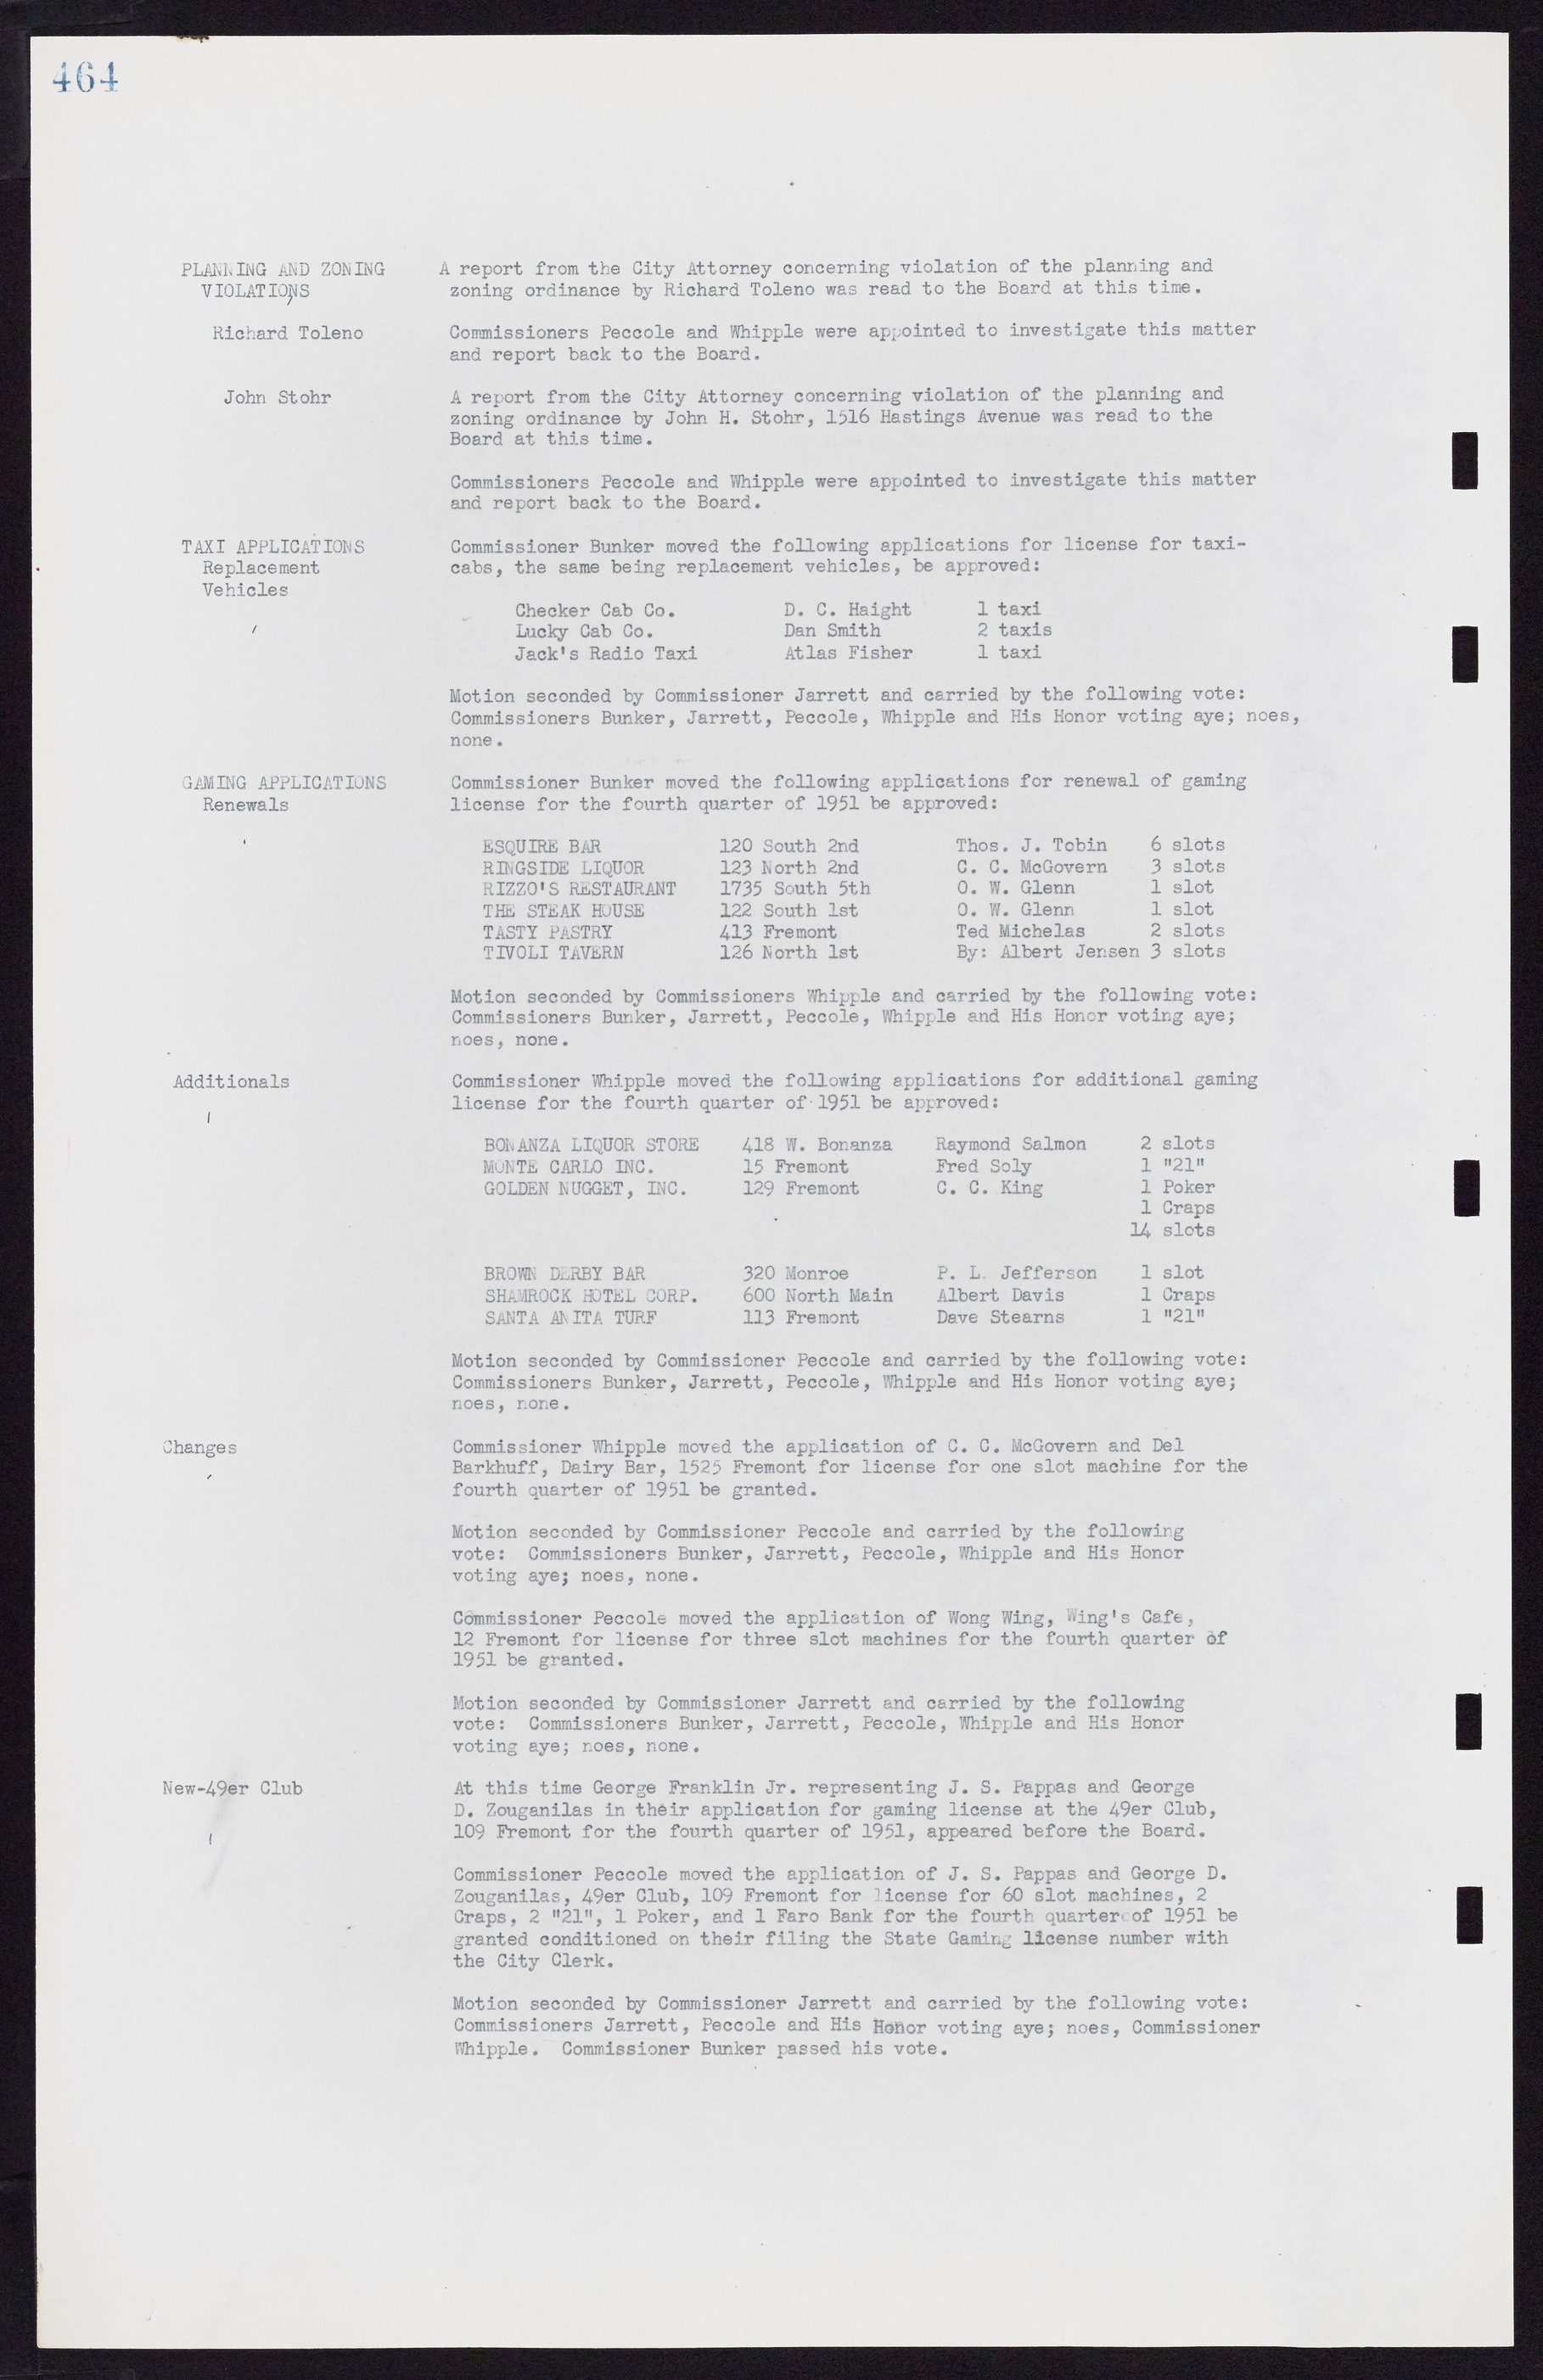 Las Vegas City Commission Minutes, November 7, 1949 to May 21, 1952, lvc000007-480